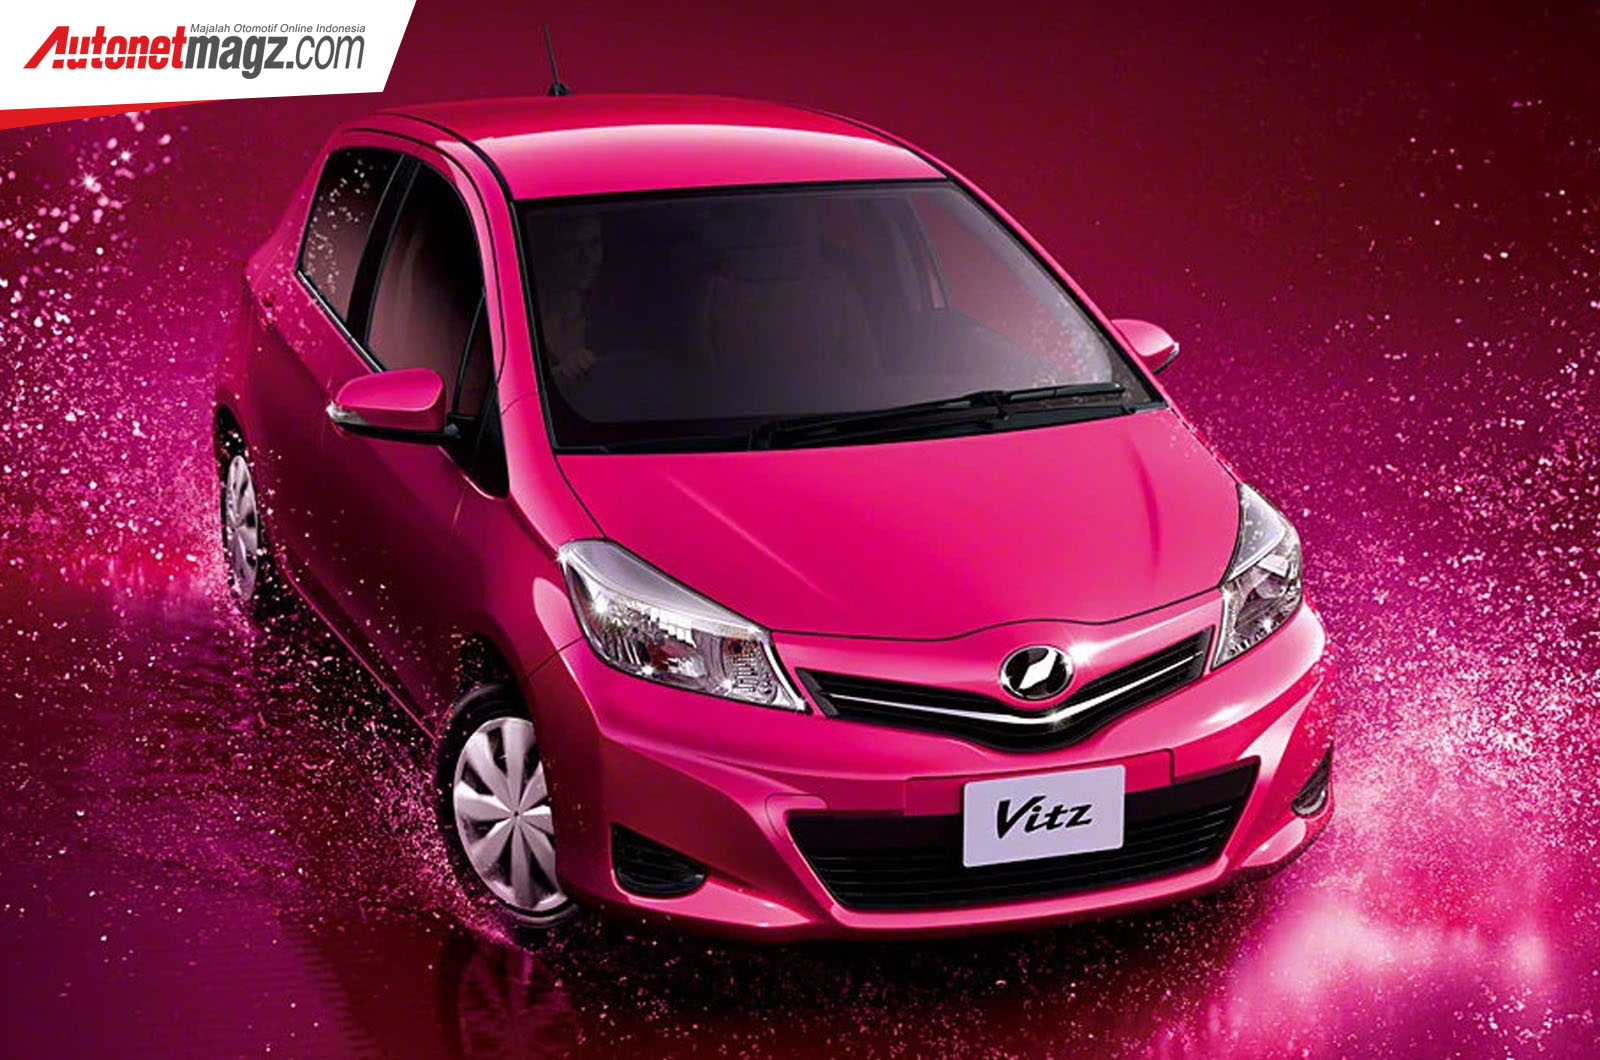 Berita, Toyota Vitz Japan: Toyota Vitz (Yaris) Generasi Berikutnya Gunakan Mesin 2 Silinder!